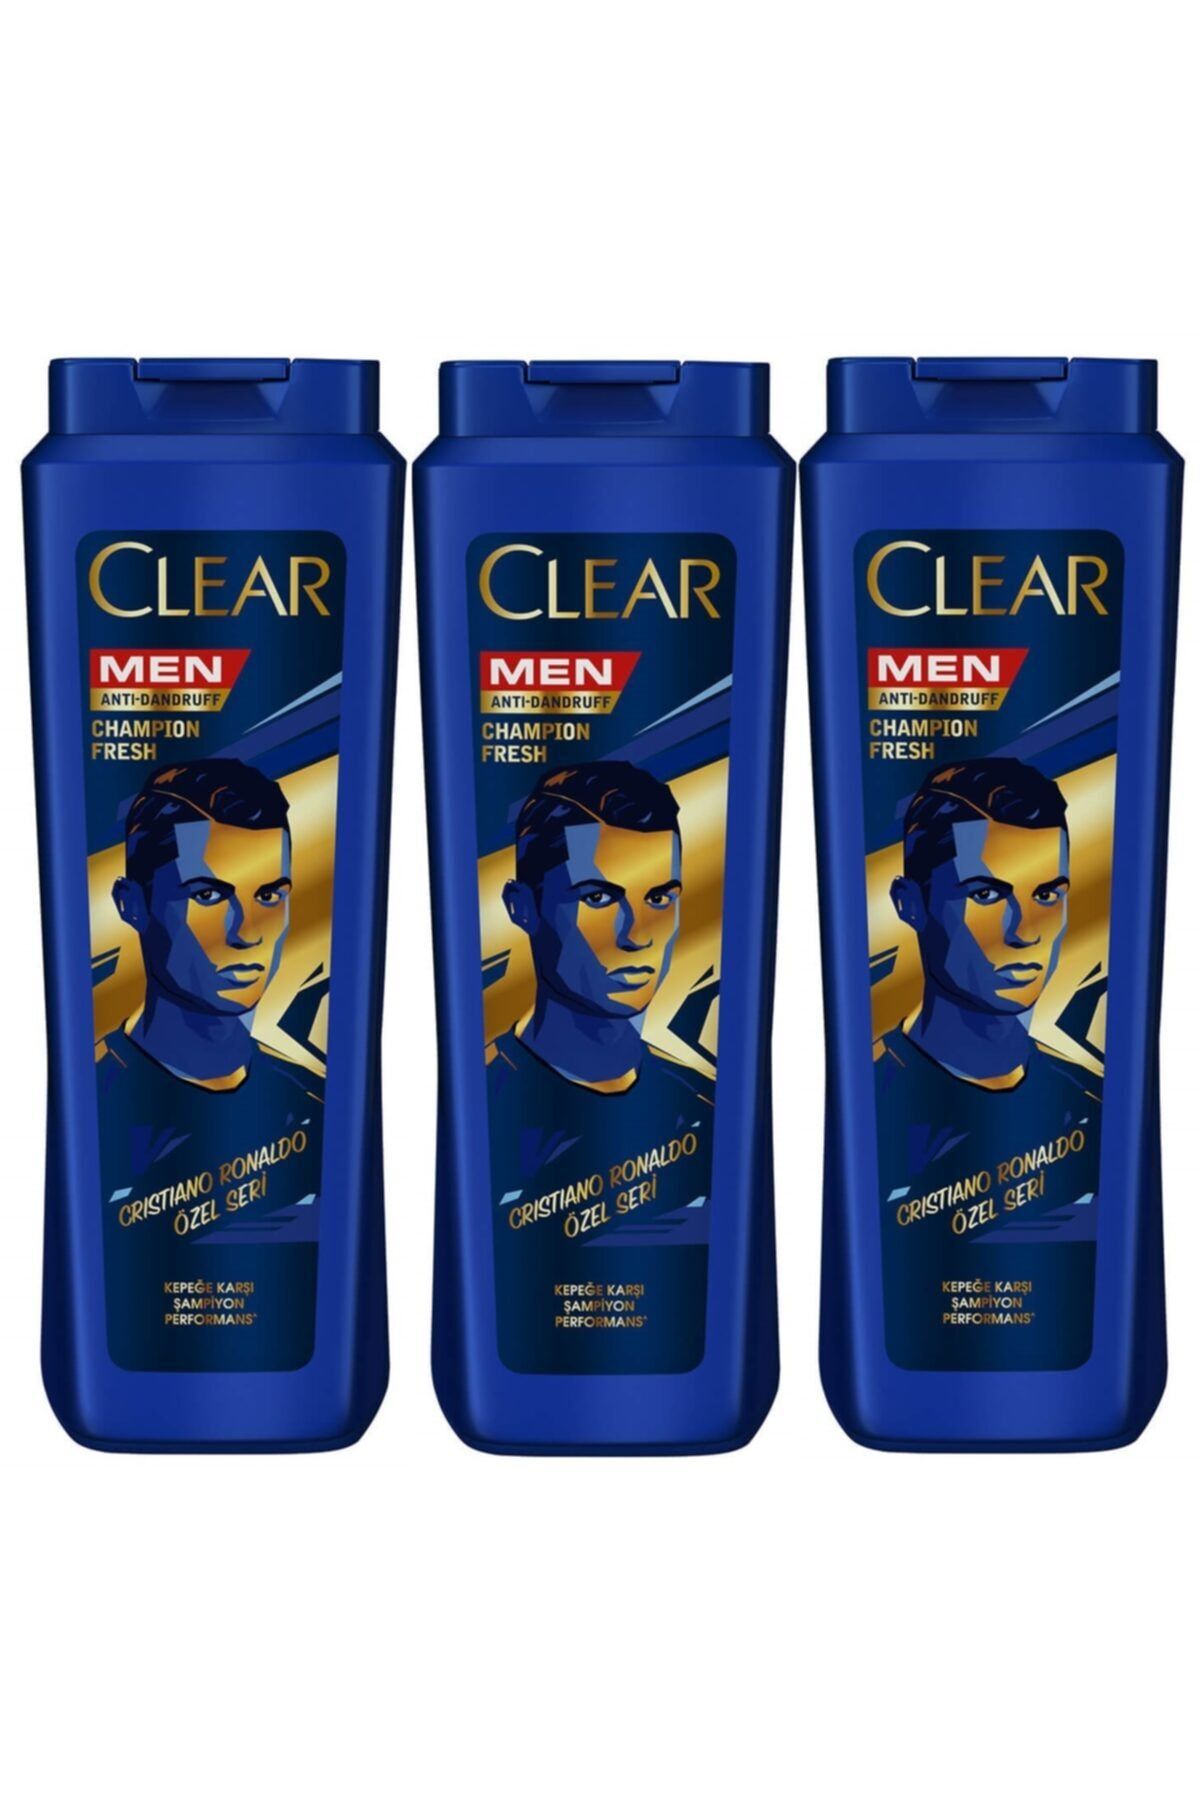 Clear Men Ronaldo Özel Seri Men Champıon Fresh 3x500 ml 3 Lü Set